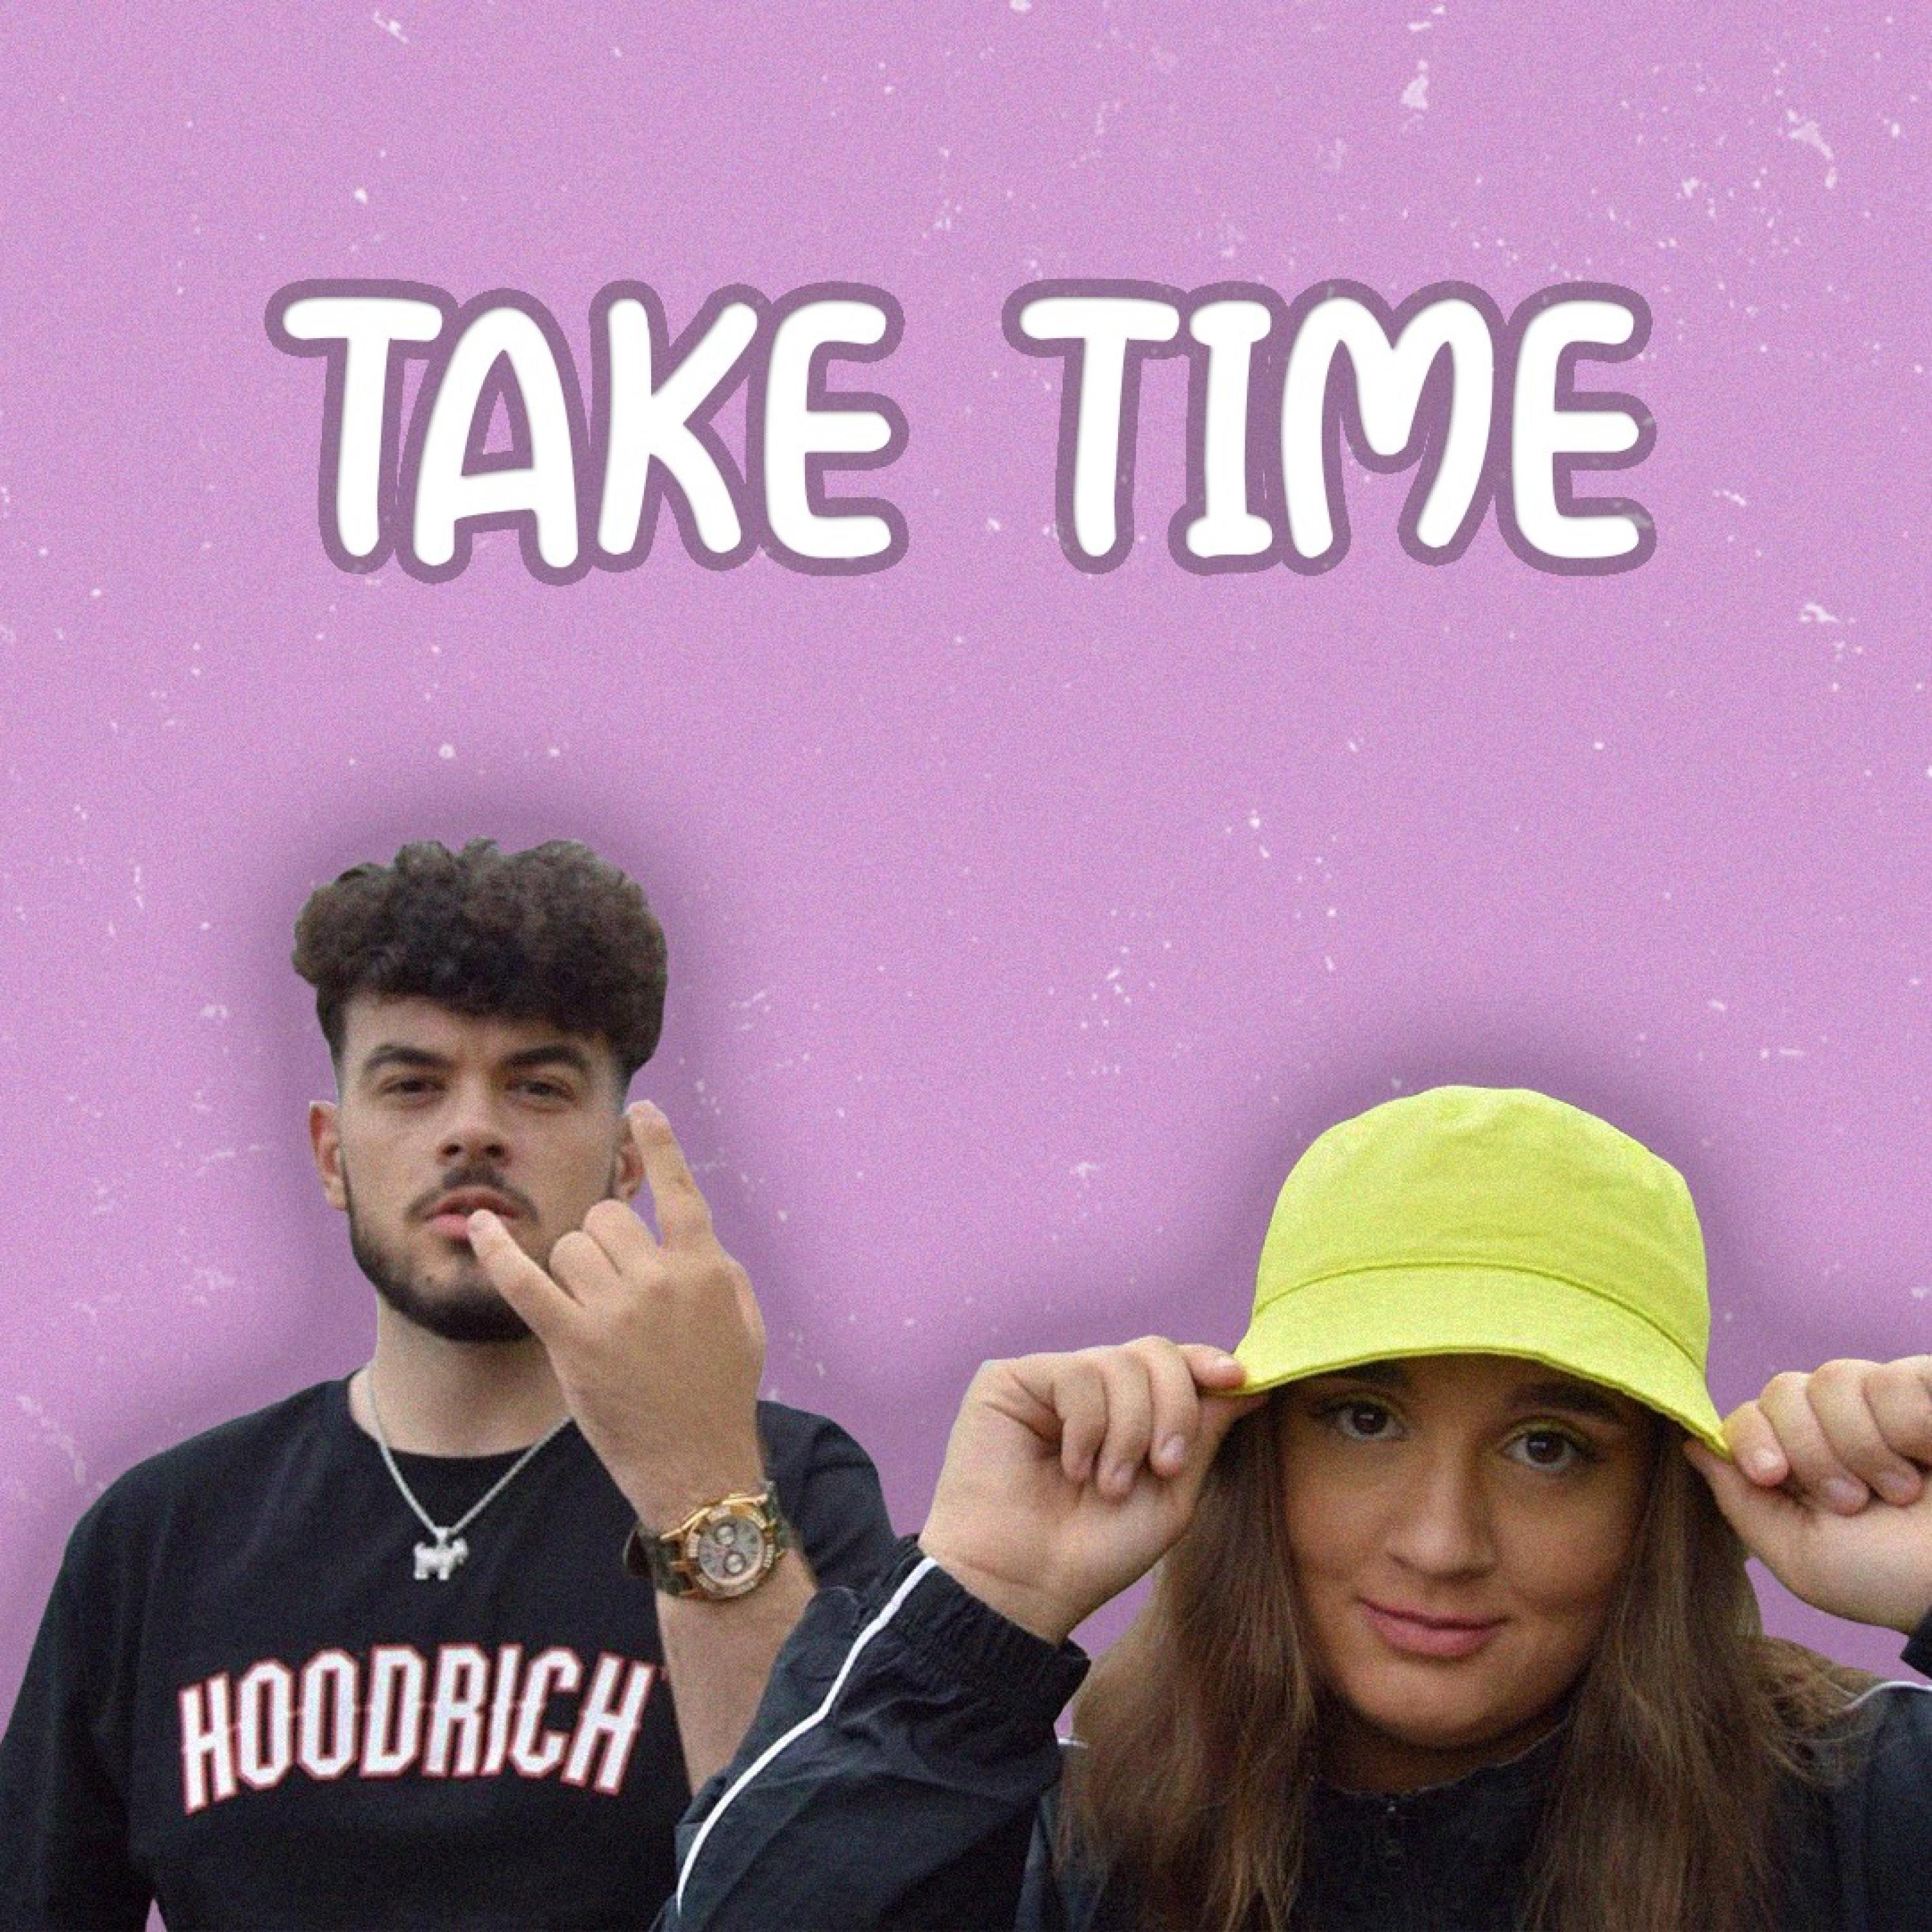 Di Ora - Take Time (feat. Drilon)